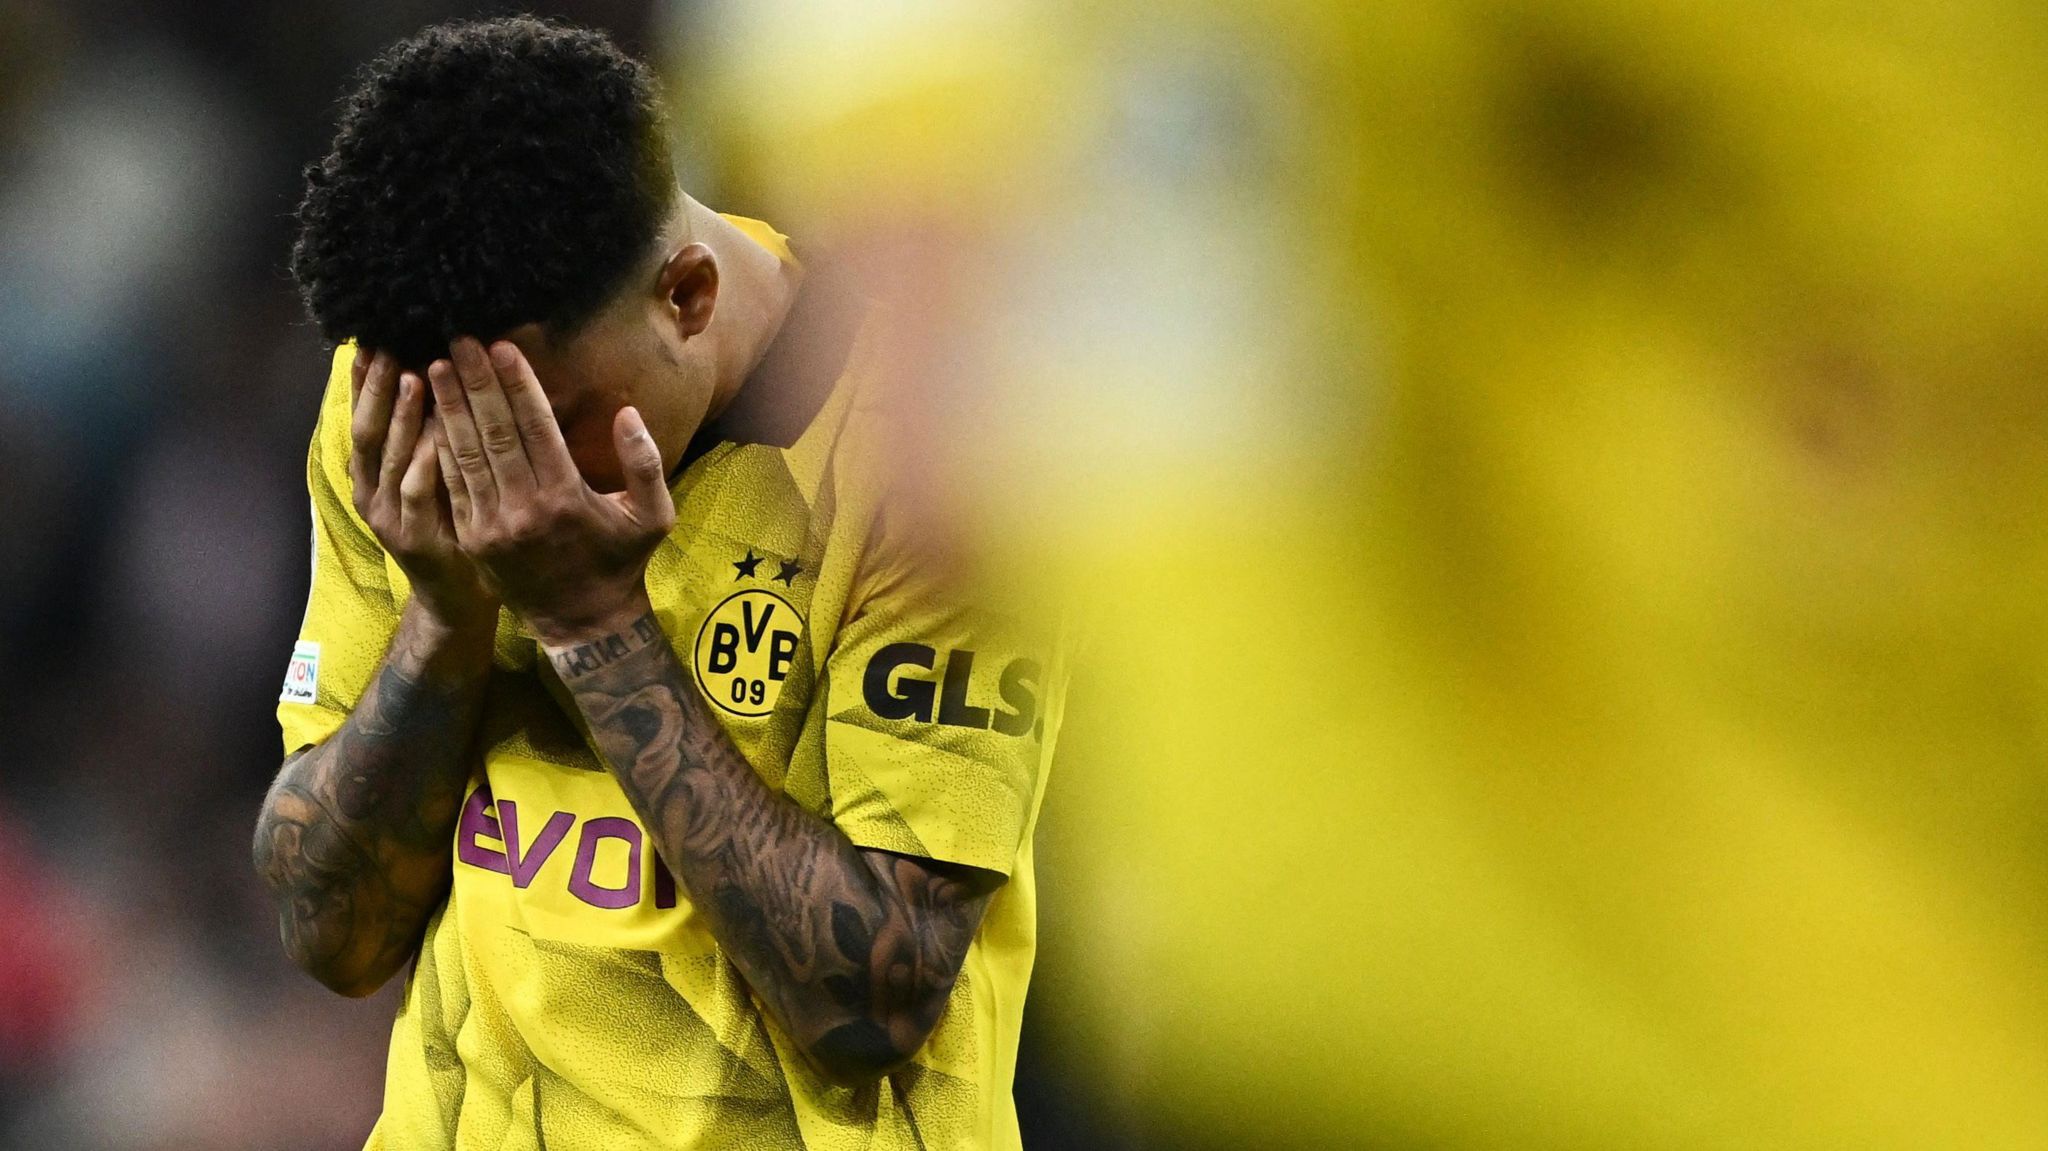 Borussia Dortmund's Jadon Sancho looks dejected after the match